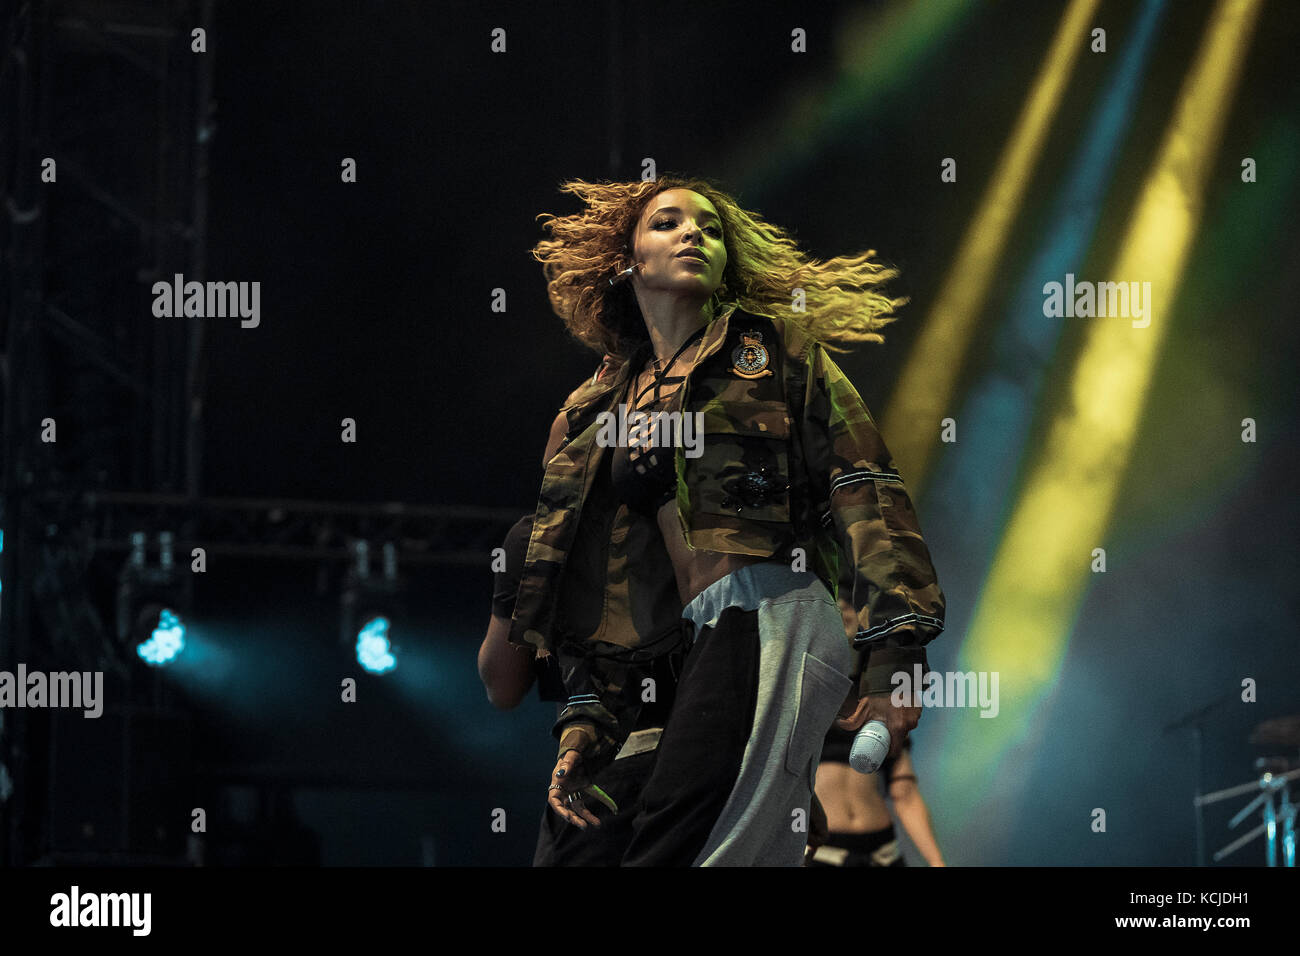 Denmark, Roskilde – June 30, 2017. The American singer, songwriter and dancer Tinashe performs a live concert during the Danish music festival Roskilde Festival 2017. Stock Photo